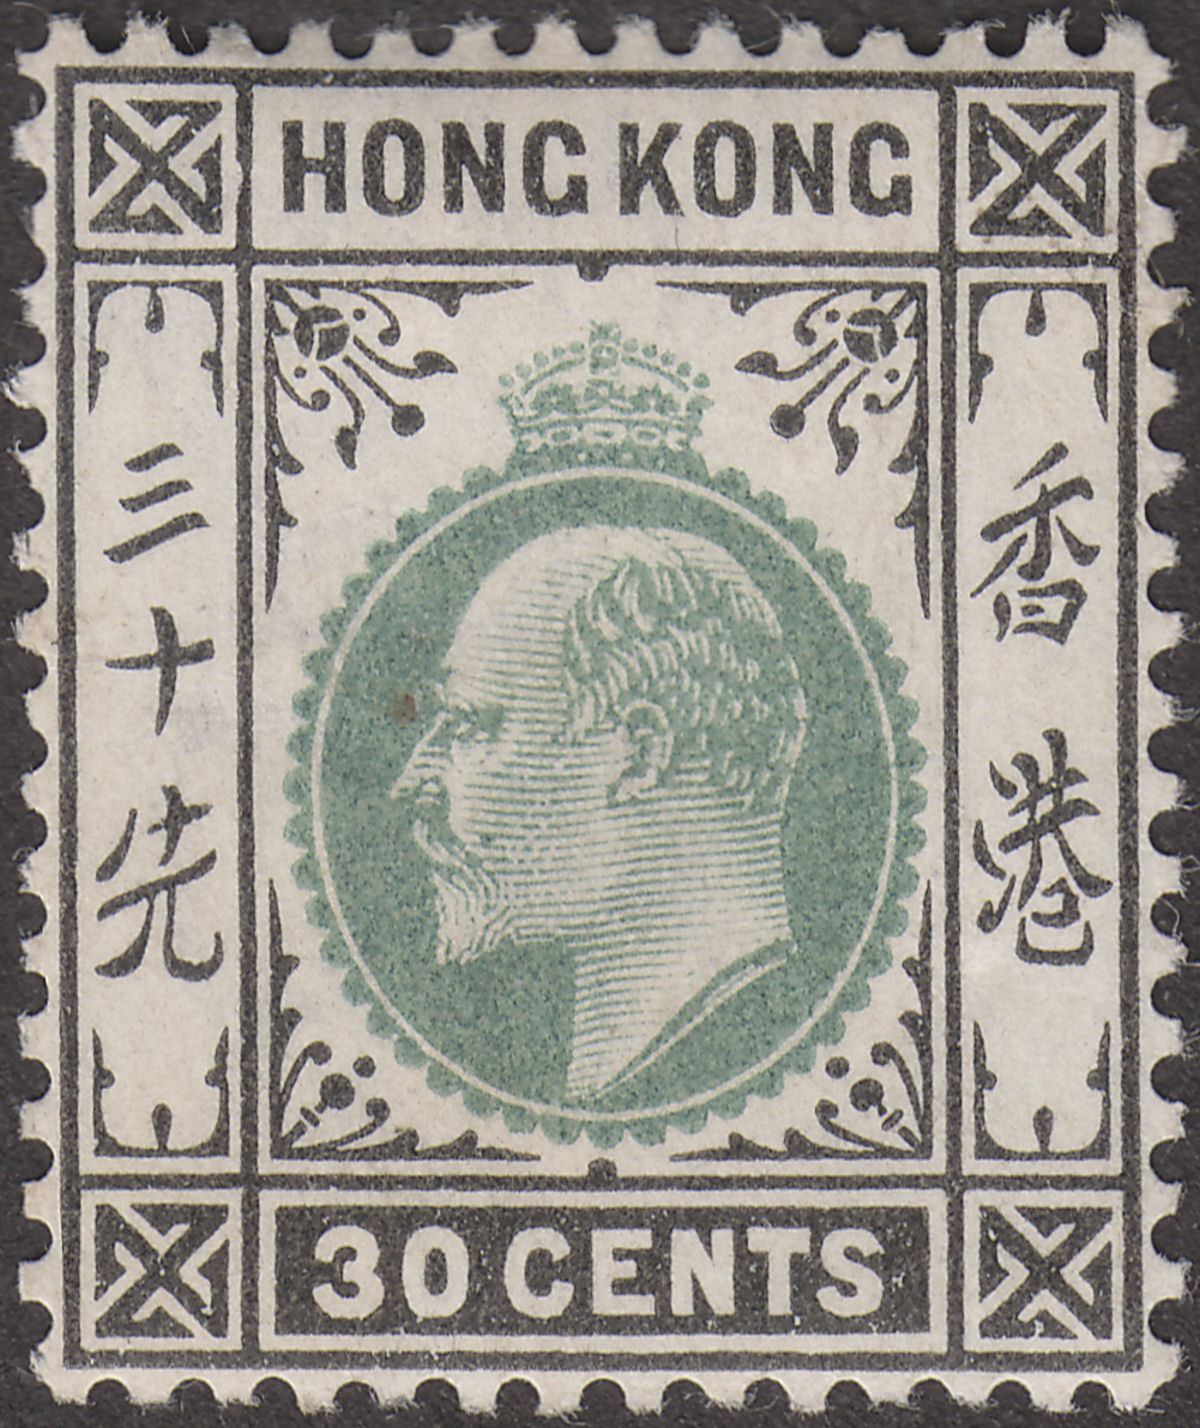 Hong Kong 1903 KEVII 30c Dull Green and Black Mint SG70 cat £65